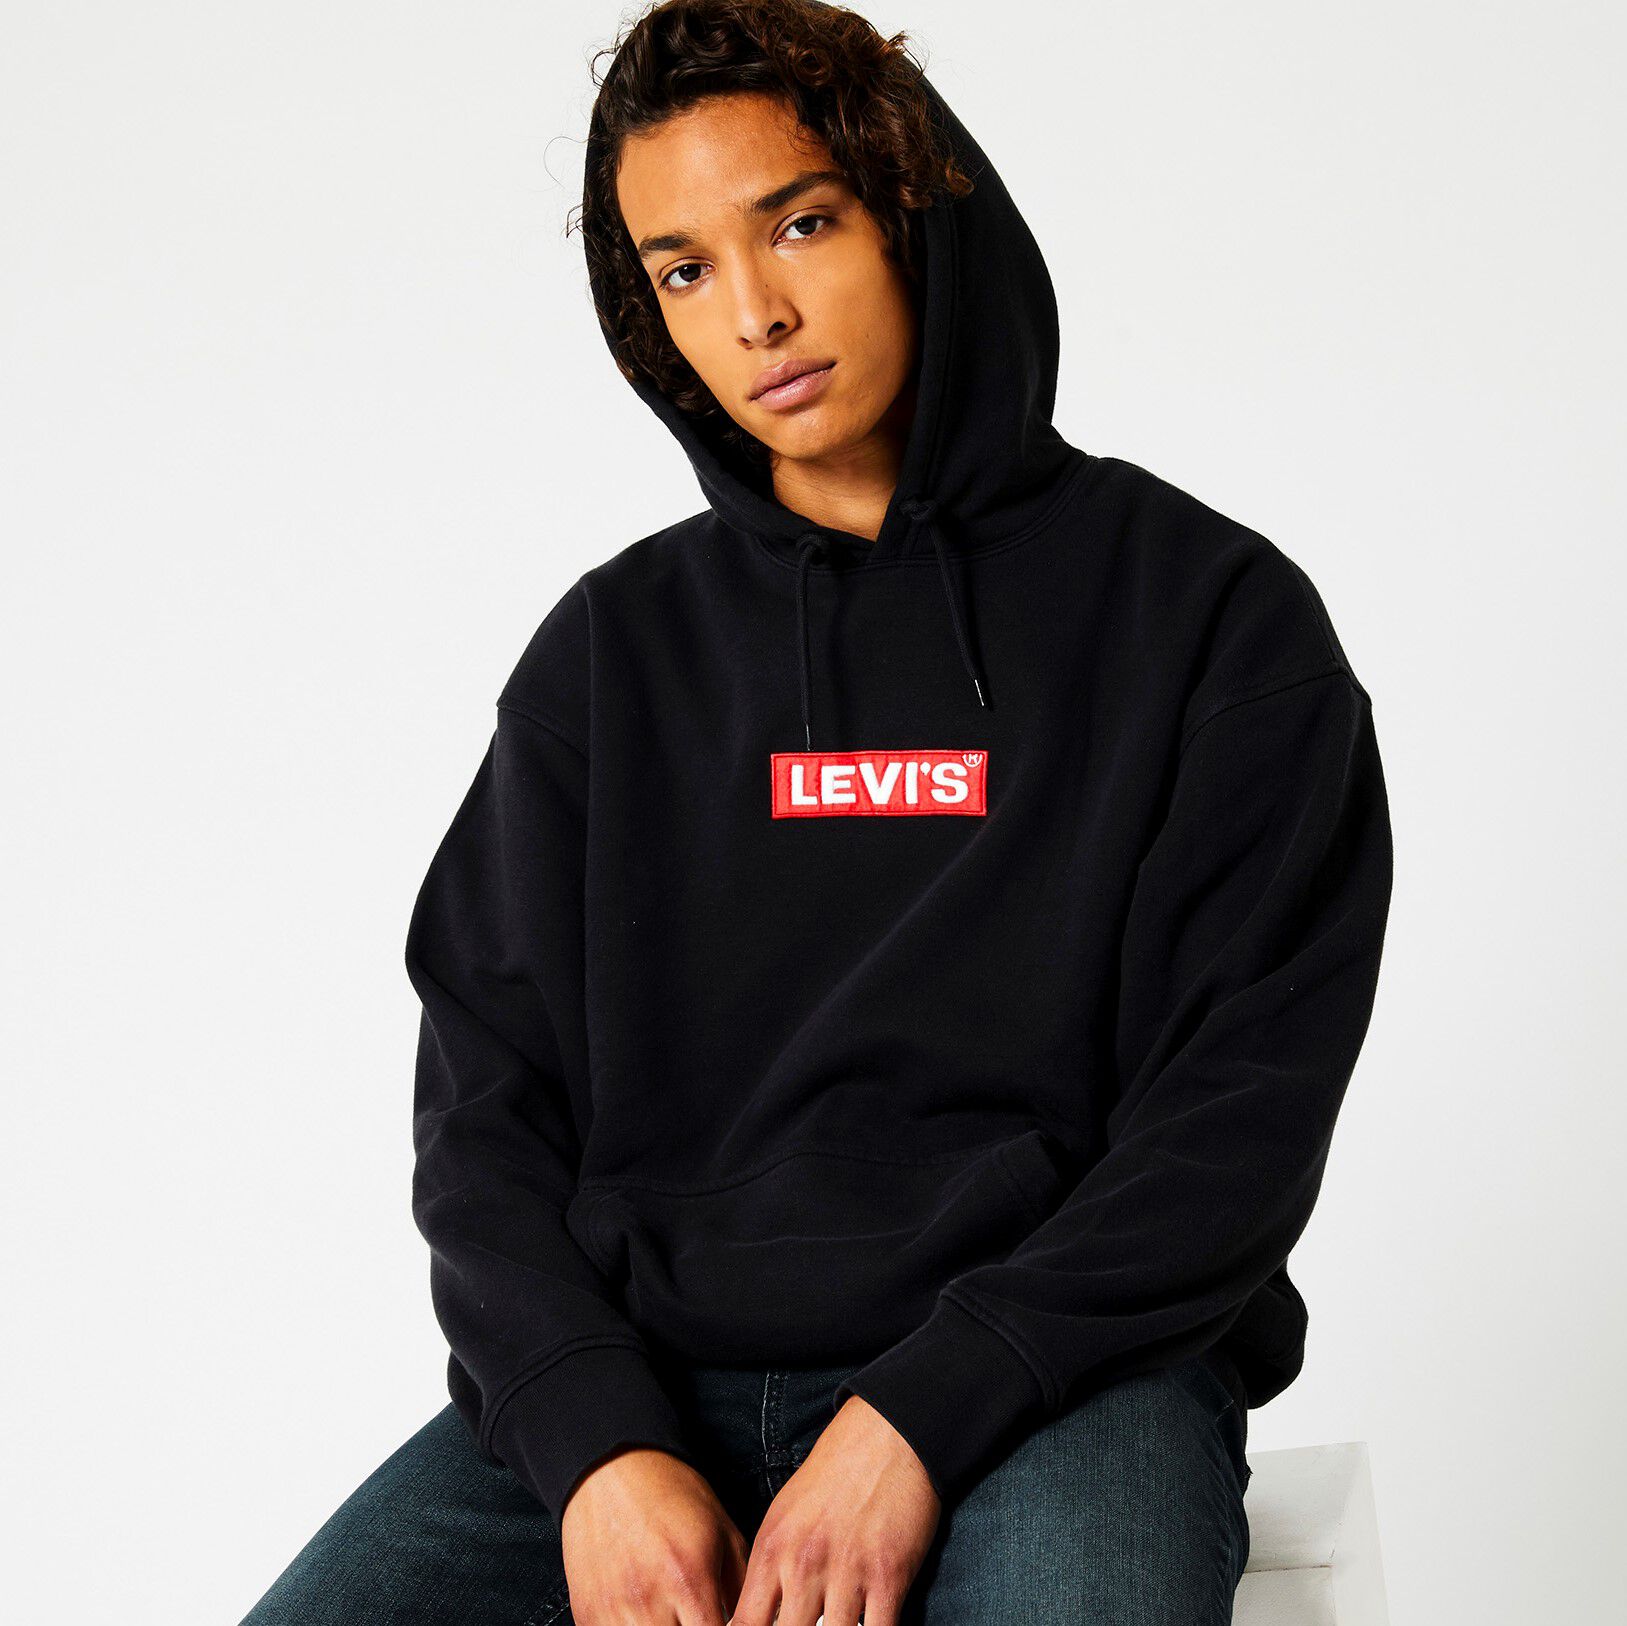 Levis Black Sweater Hot Sale, SAVE 48% 